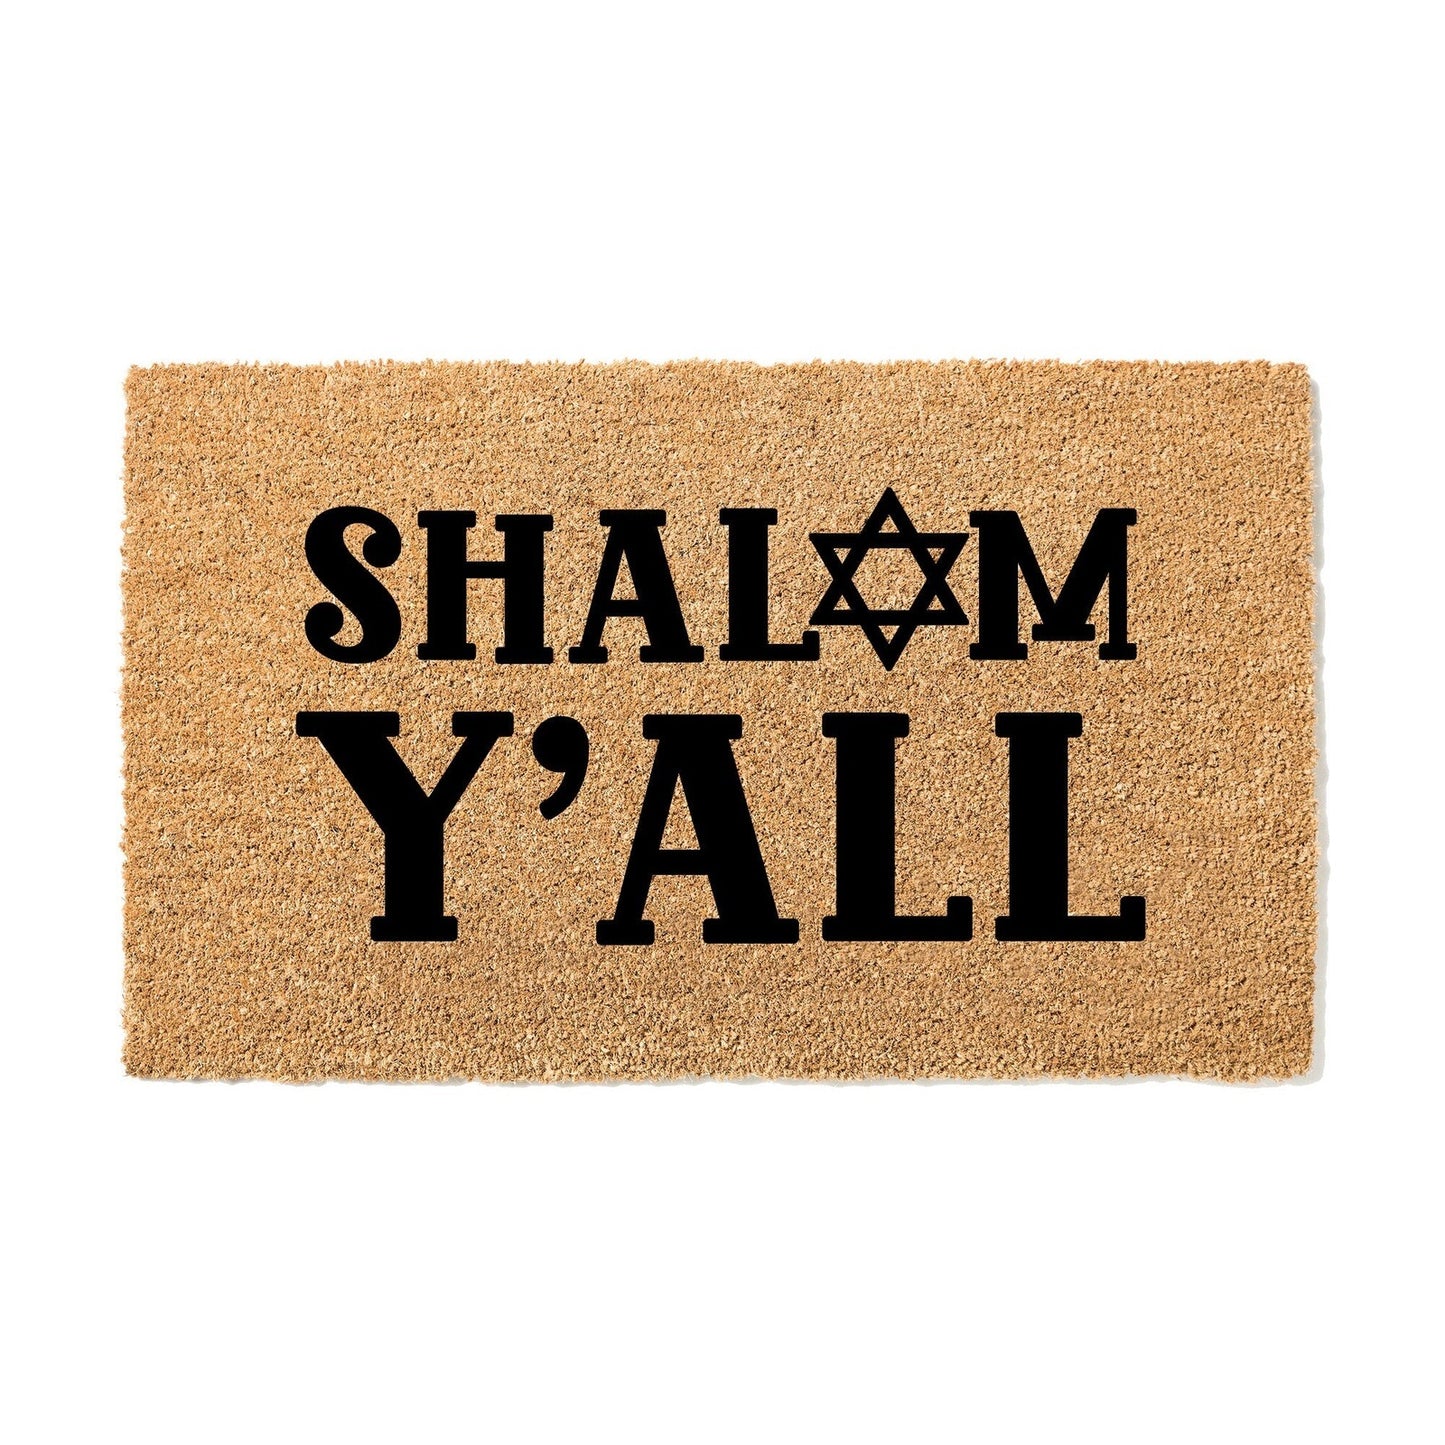 Shalom Y'all Hanukkah Doormat, Cute Holiday Welcome Mat, Outdoor Hanukkah Decoratons, Chanukah Festival of Lights Holiday Door Mat